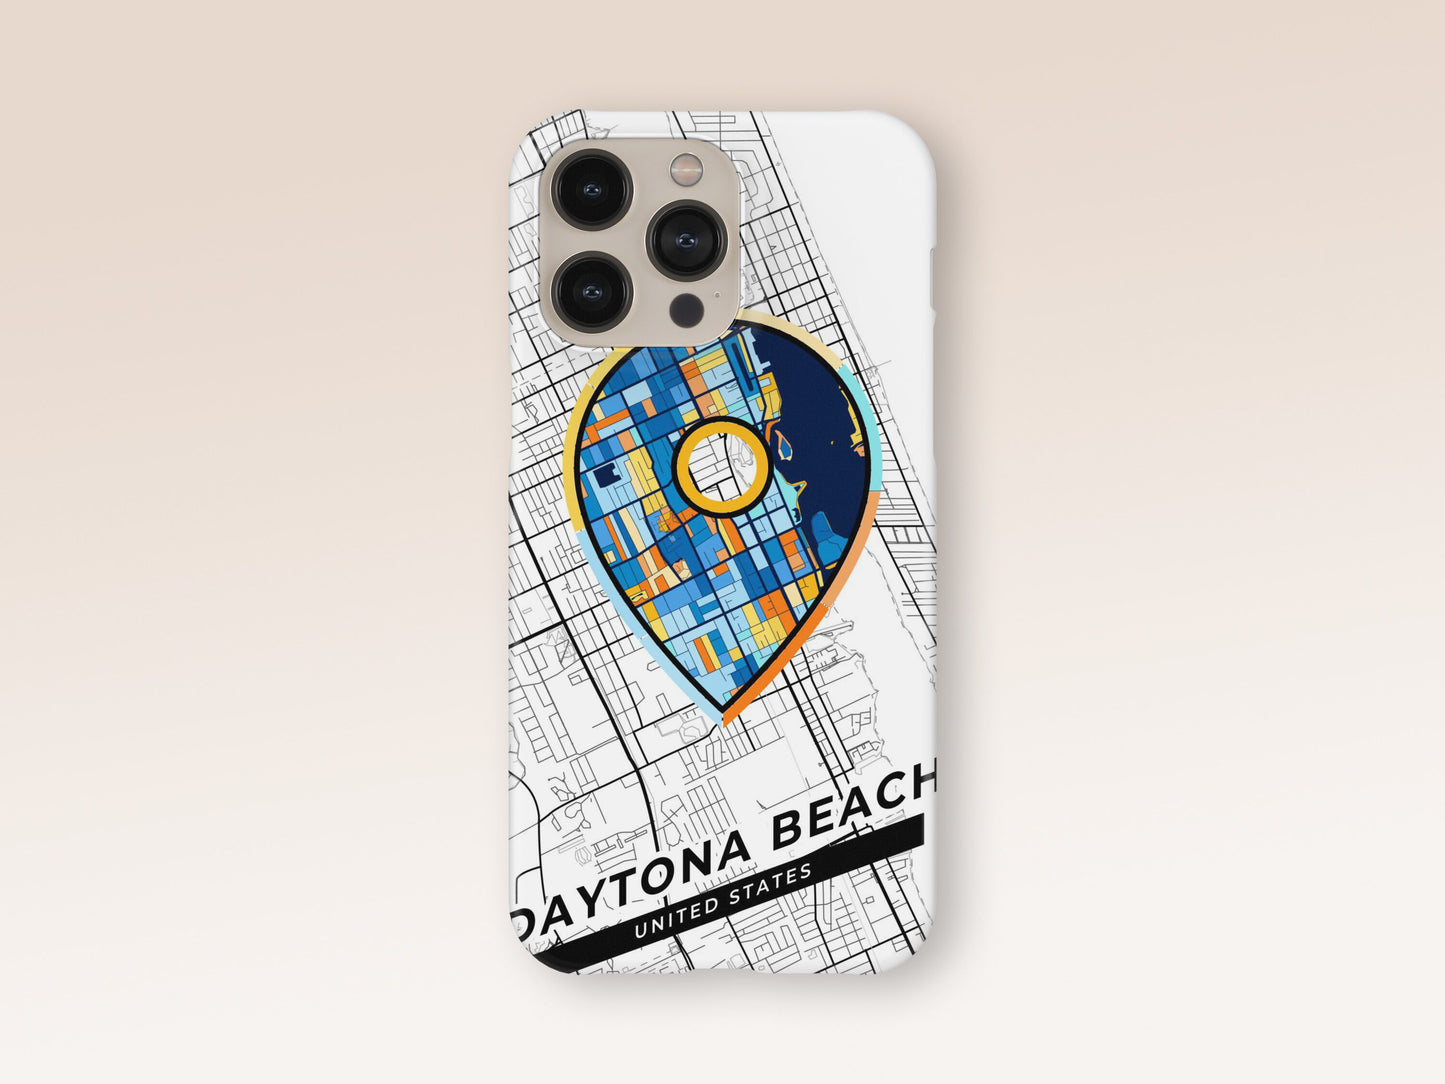 Daytona Beach Florida slim phone case with colorful icon. Birthday, wedding or housewarming gift. Couple match cases. 1